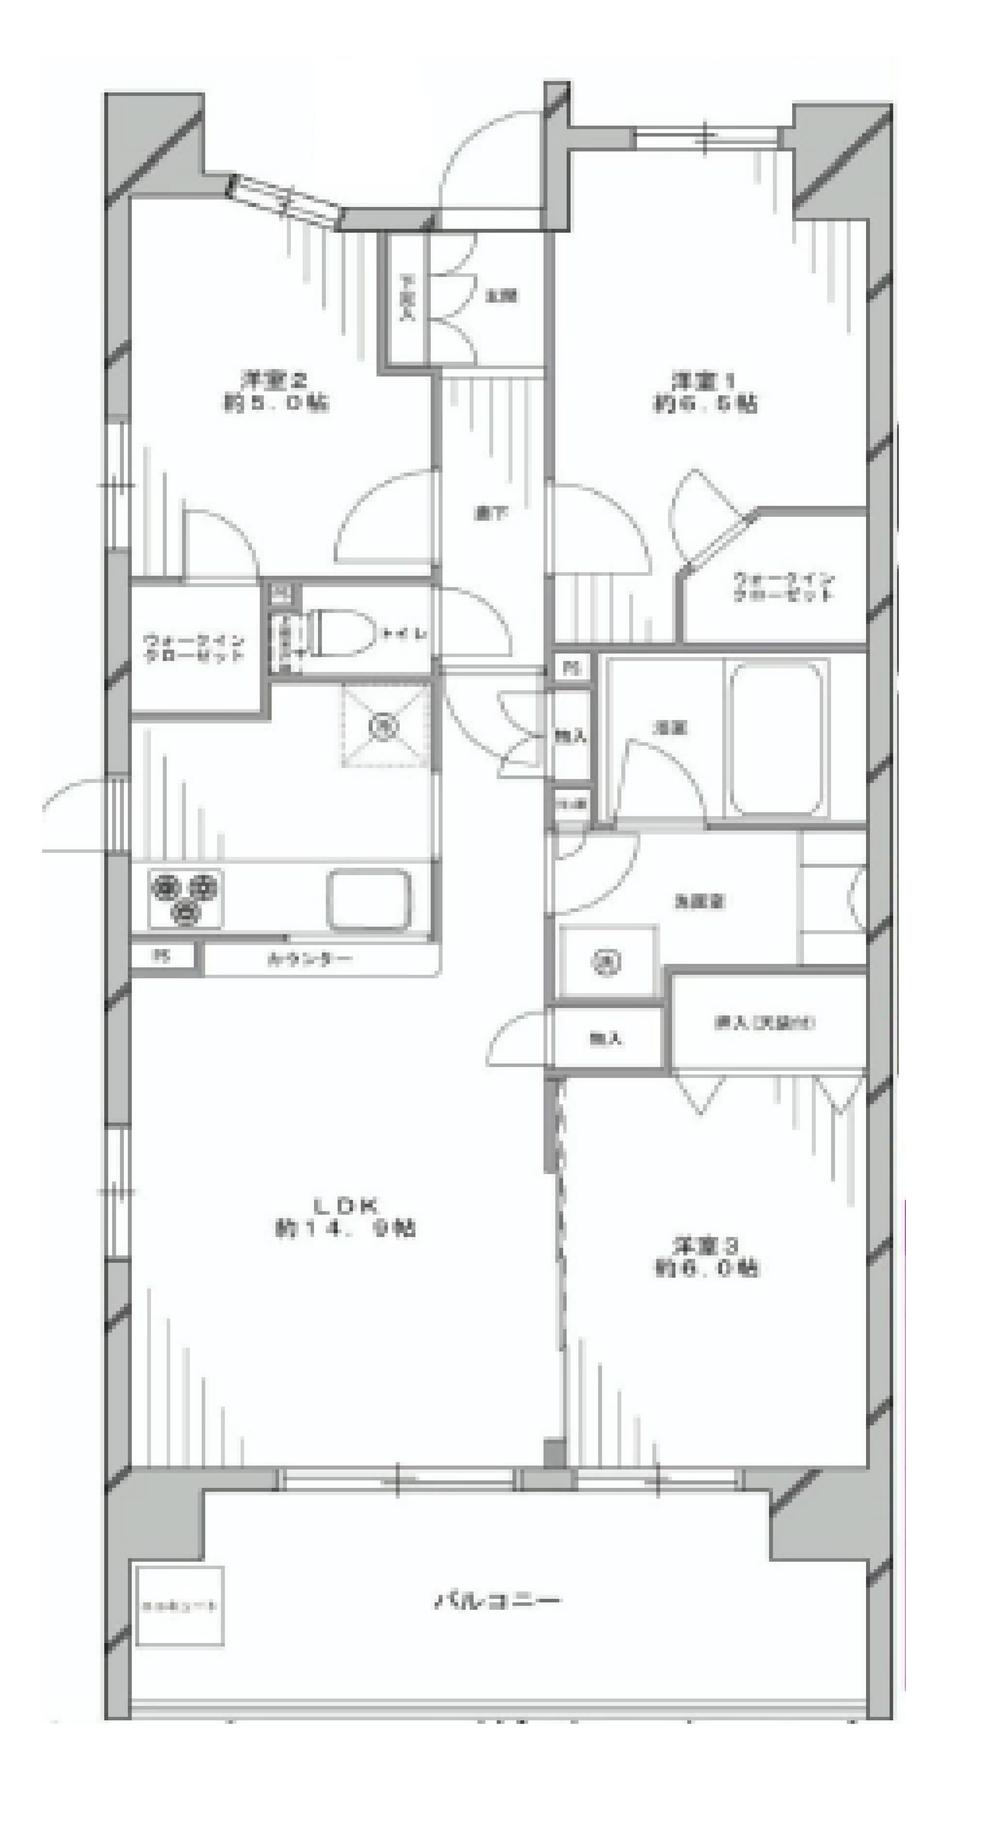 Floor plan. 3LDK + 2S (storeroom), Price 31,800,000 yen, Occupied area 72.11 sq m , Balcony area 12.5 sq m